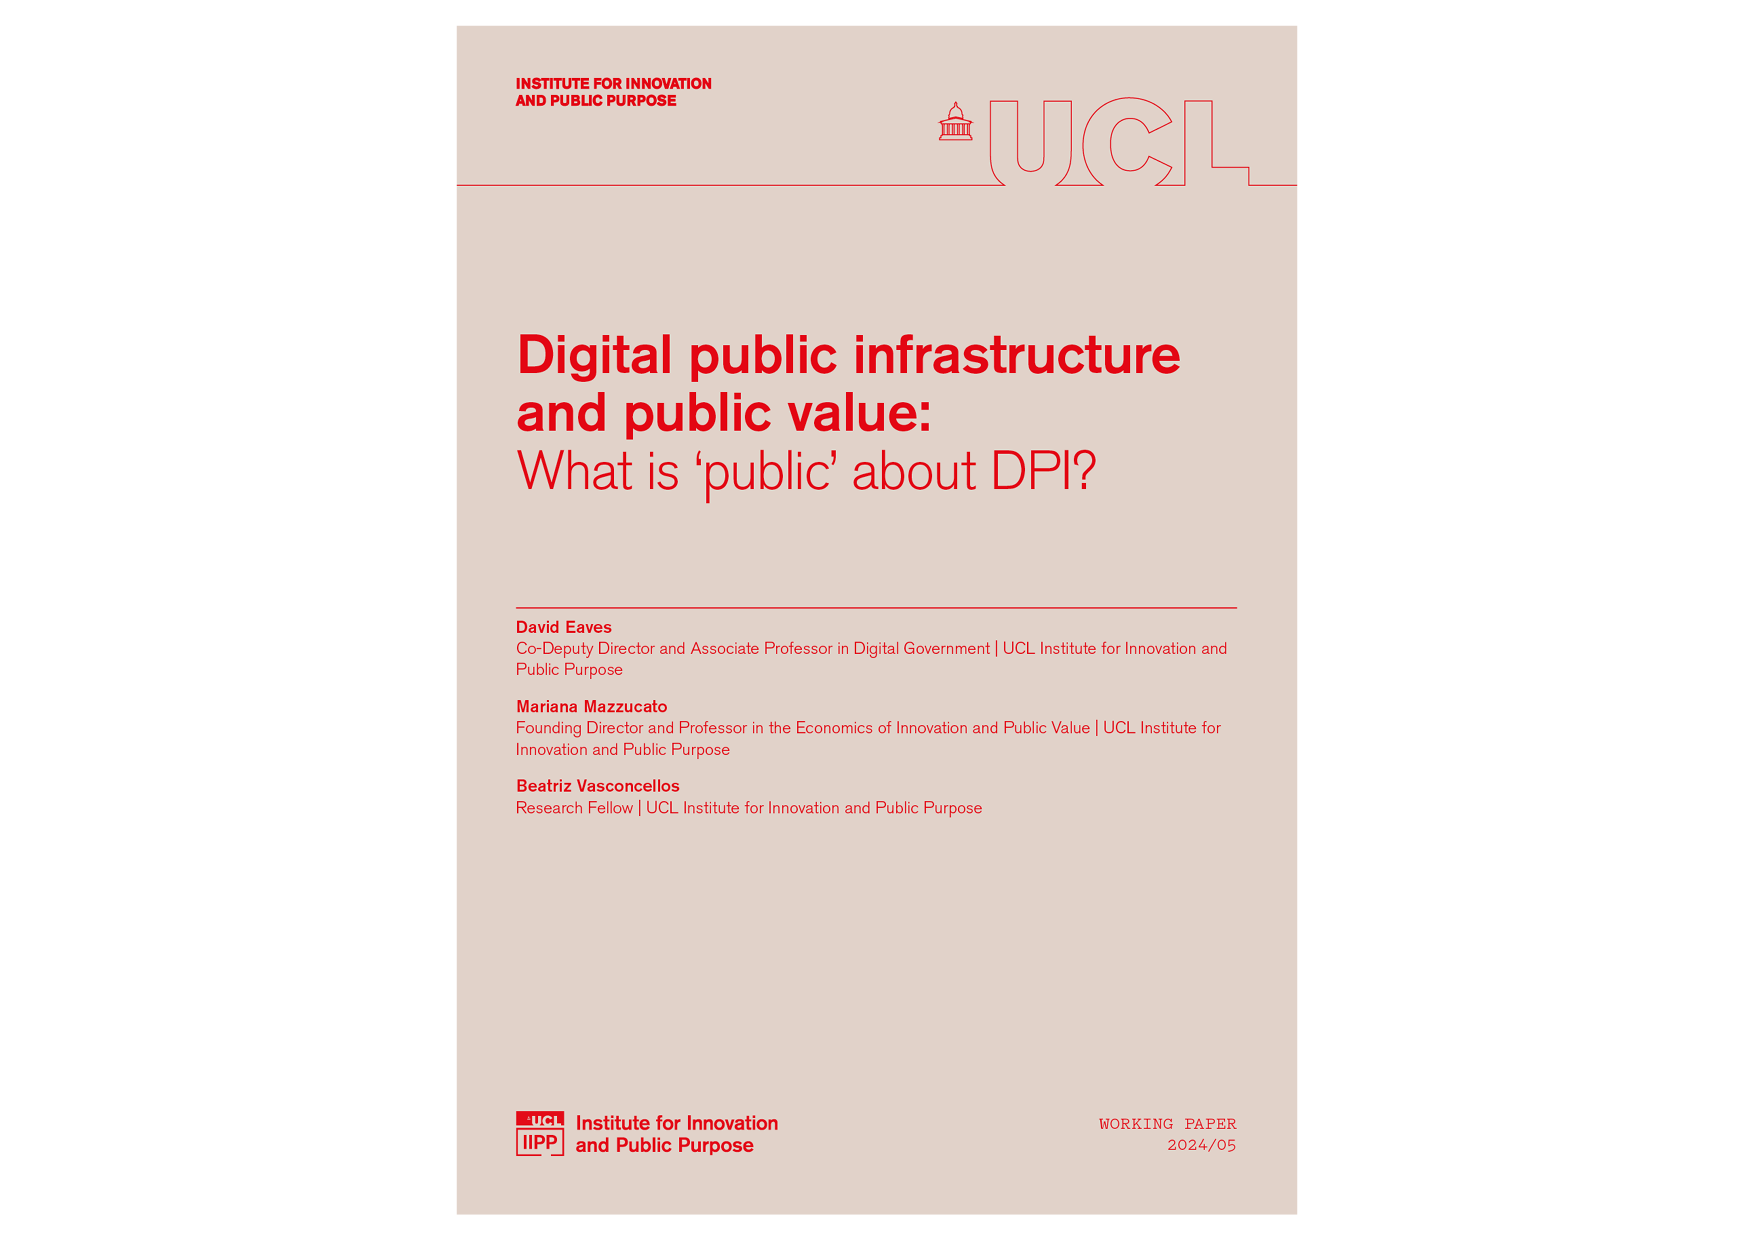 DPI and public value